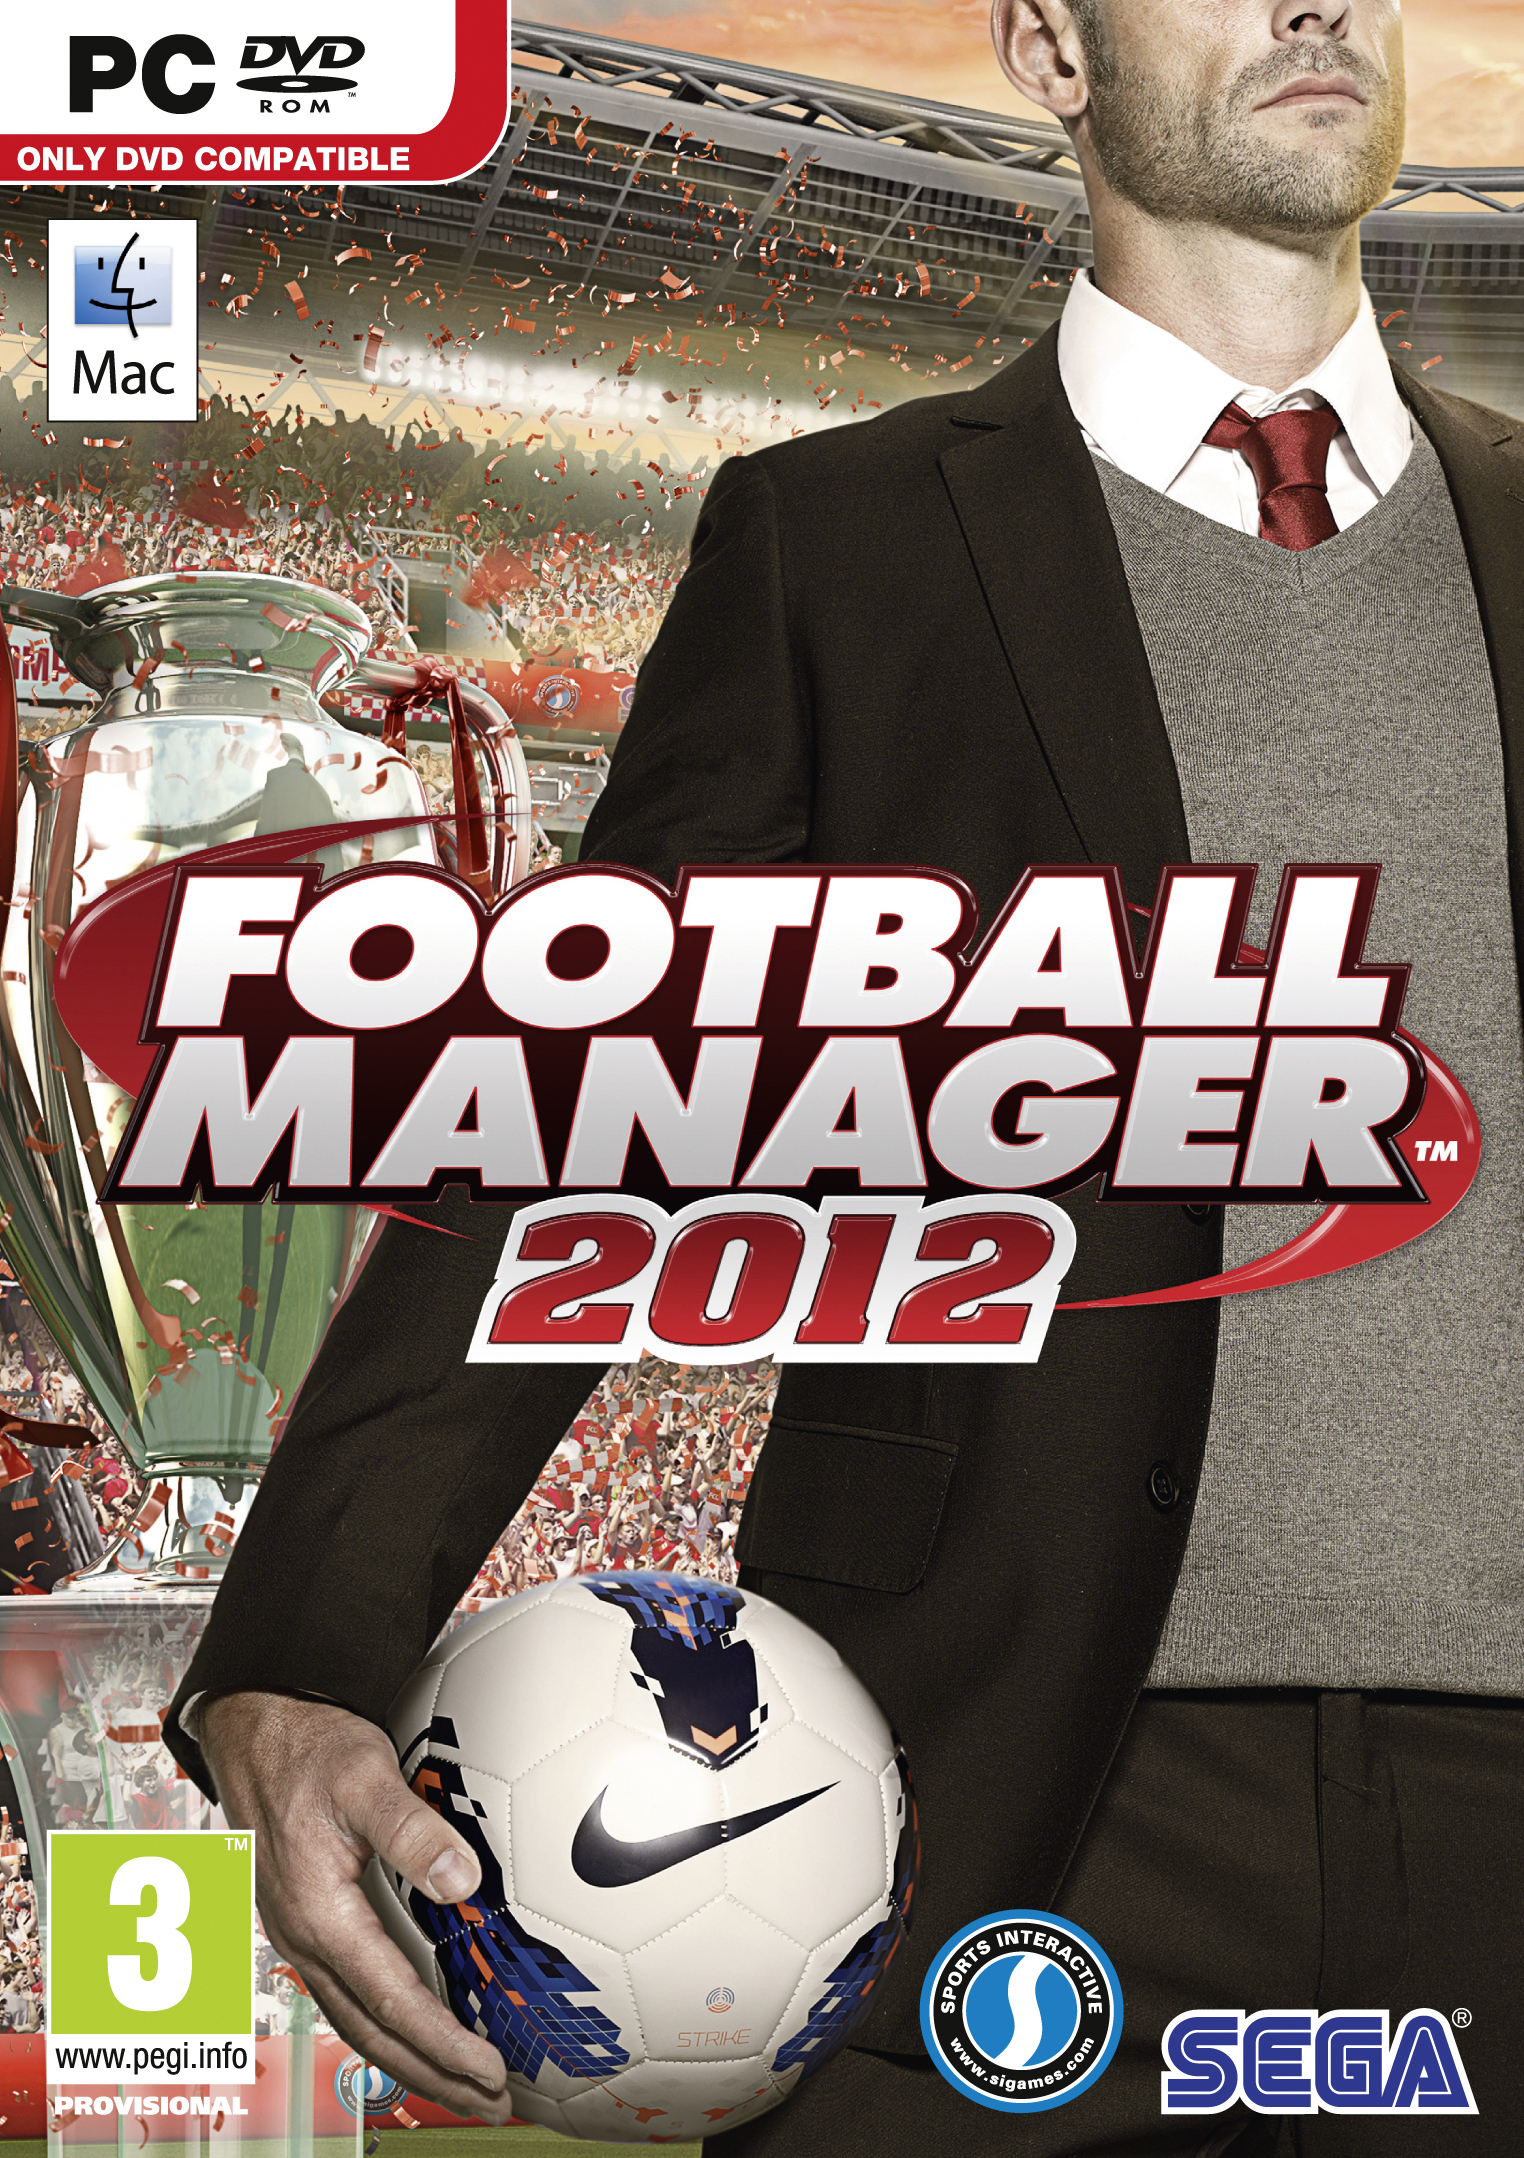 Football Manager, Dator, Samuel Armenteros, Spel, Fotboll, Premier League